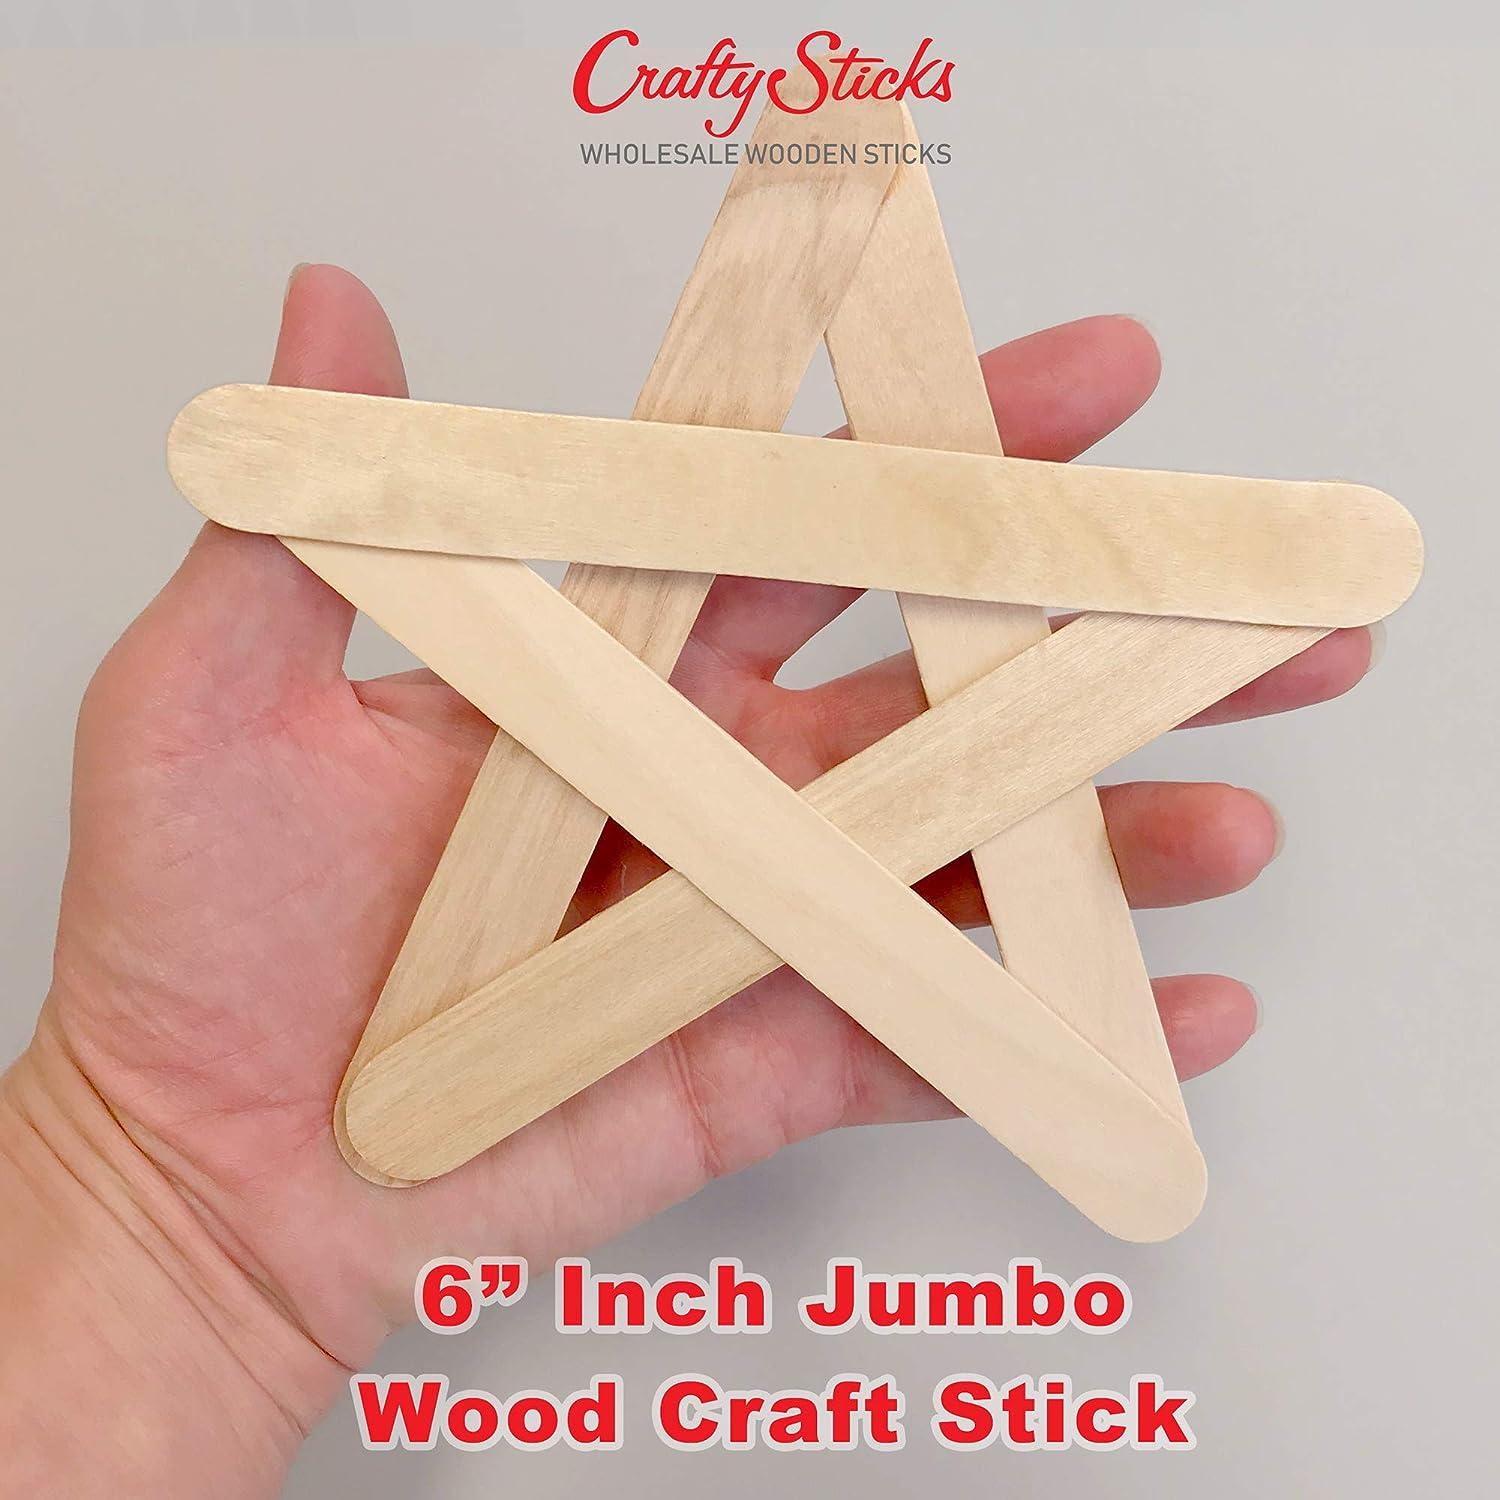 100 Sticks - Jumbo Wood Craft Popsicle Sticks 6 inch Black